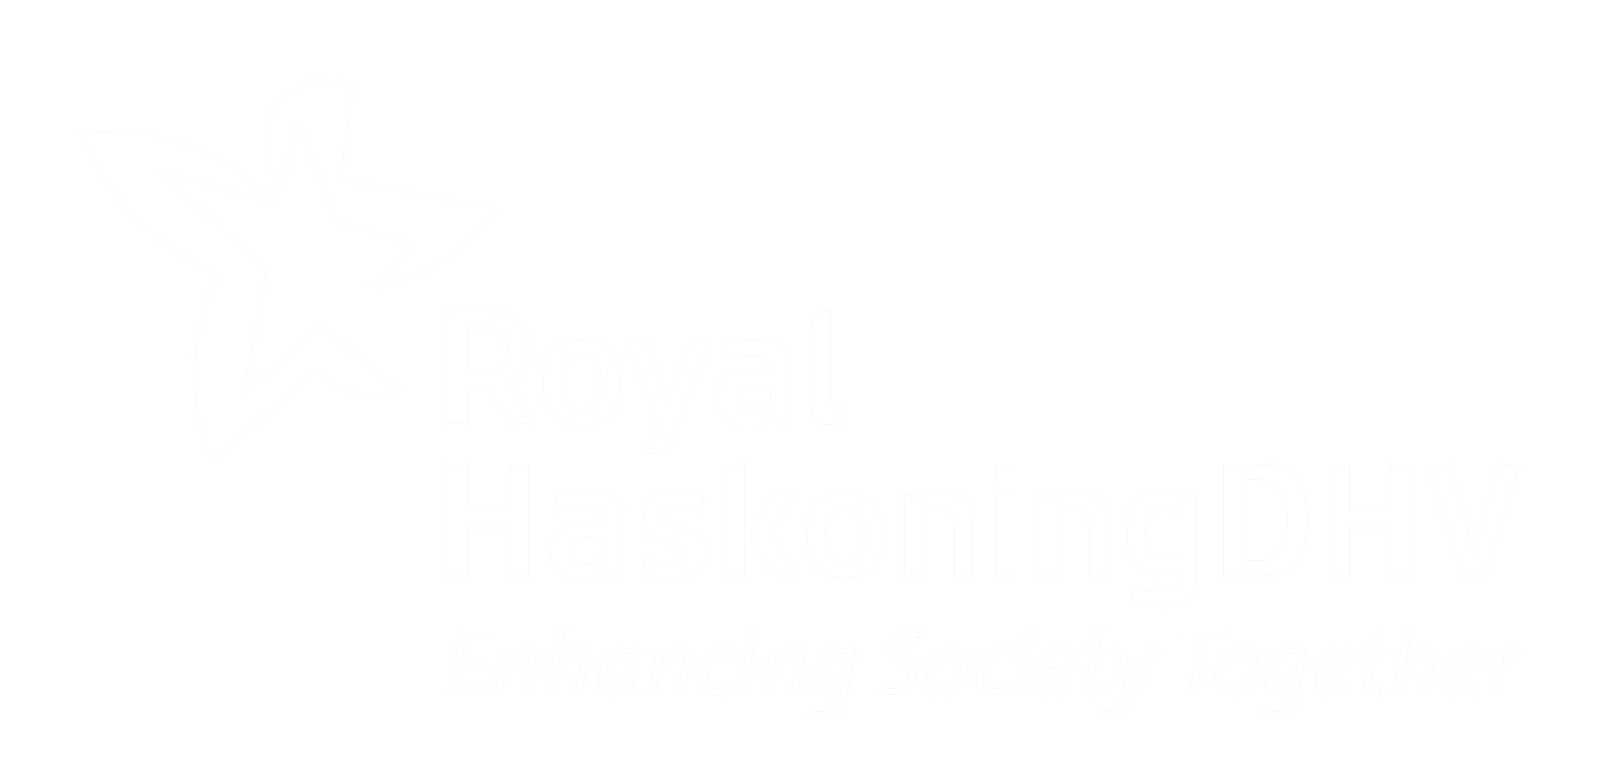 Royal HaskoningDHV - Enhancing Society Together